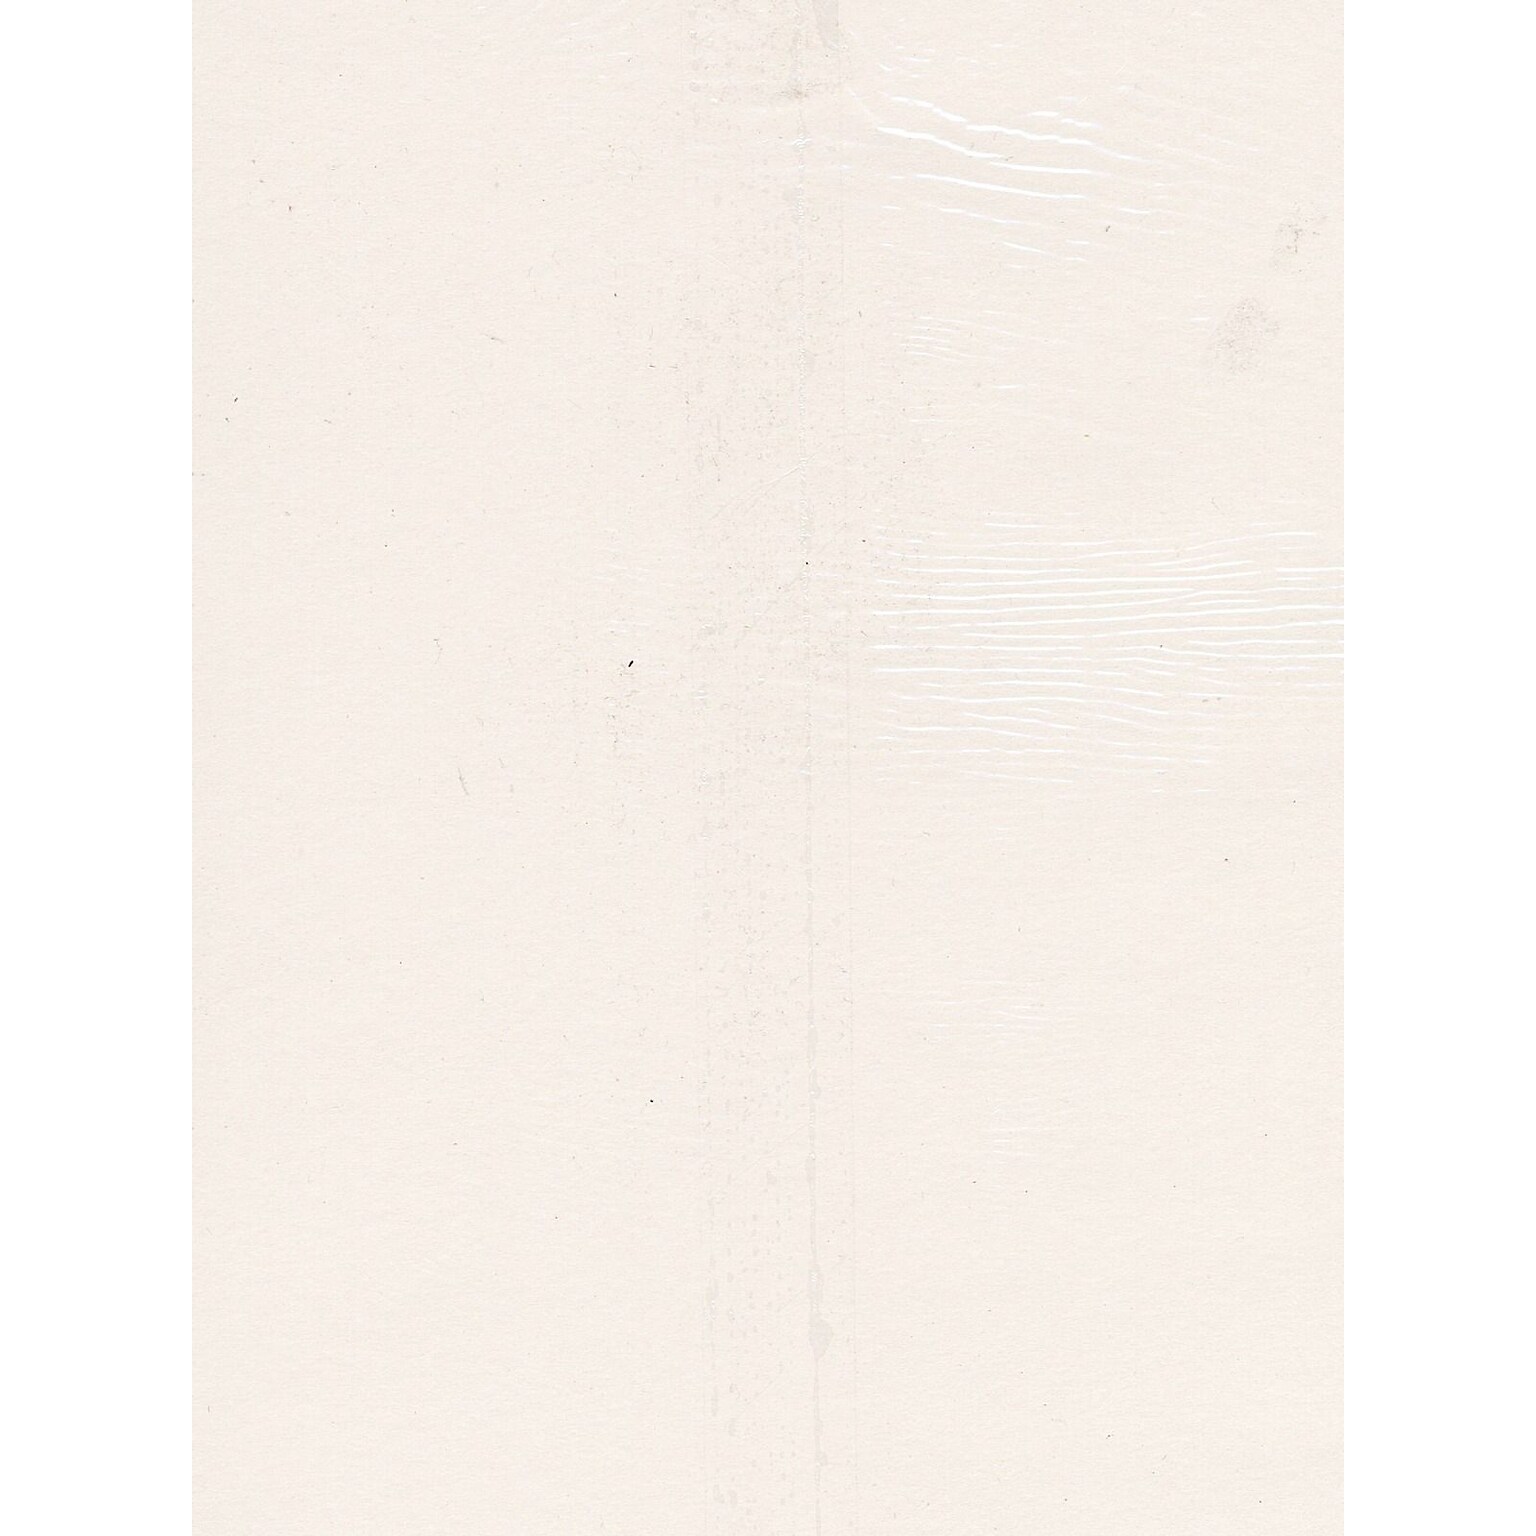 Pacon Sunworks Construction Paper Bright White 12 x 18, 250 Sheets/Pk (8707)